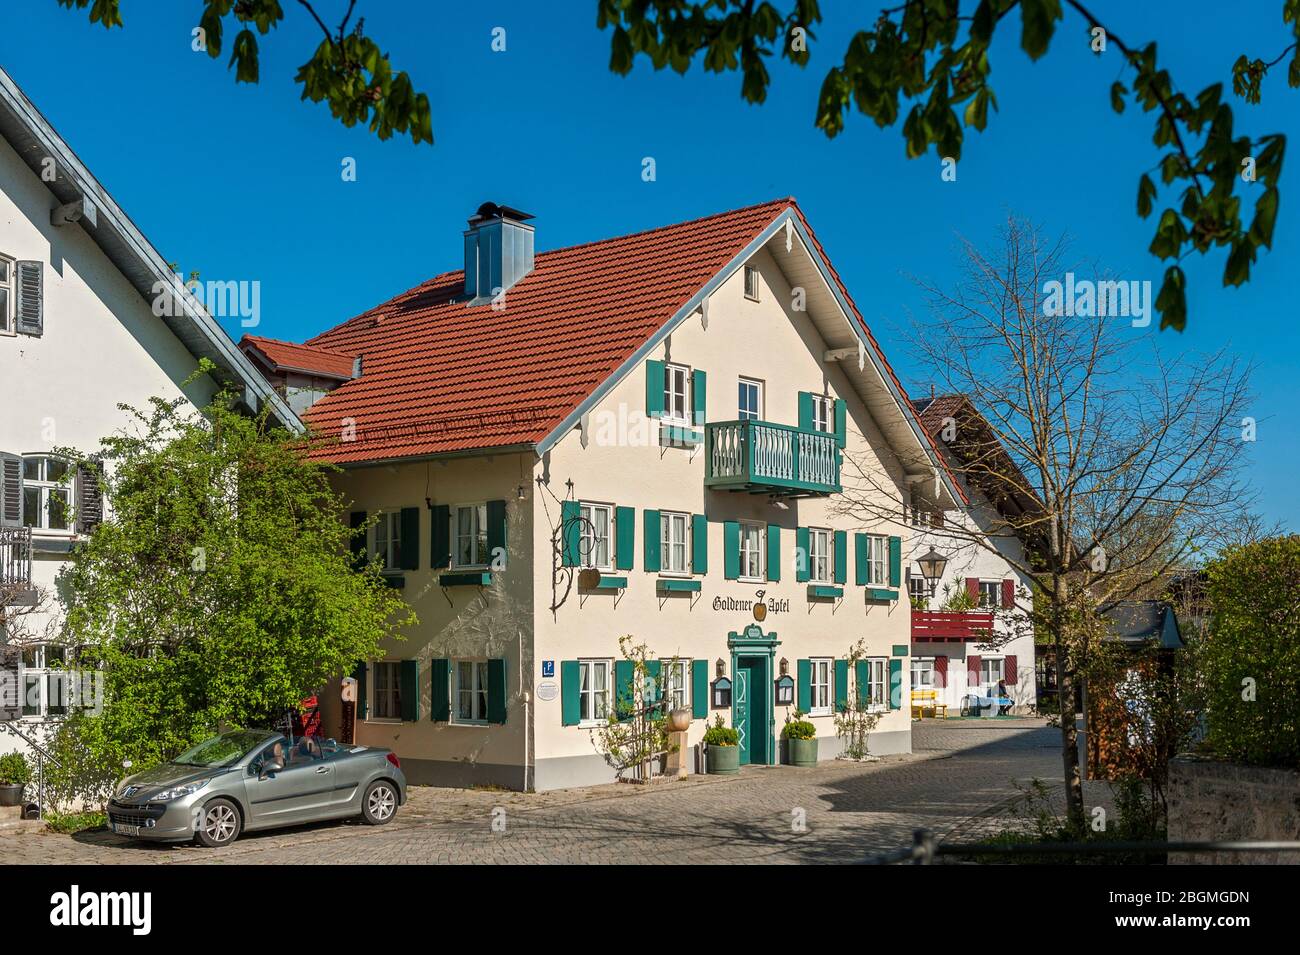 Apfeldorf, Bayern, Deutschland Stockfoto